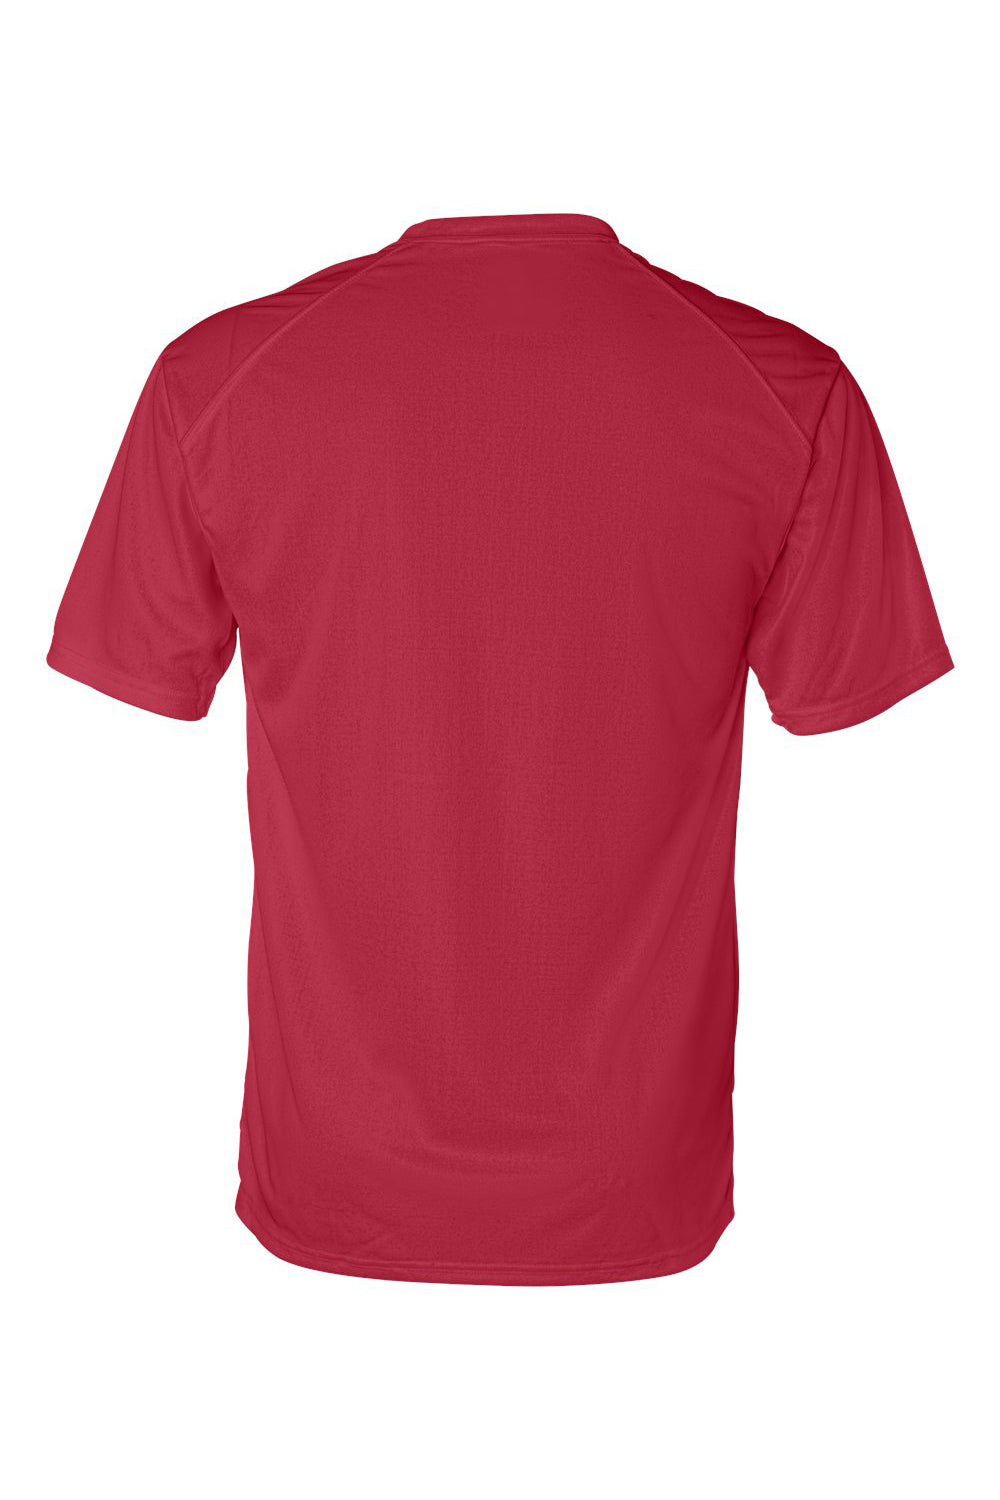 Badger 4120 Mens B-Core Moisture Wicking Short Sleeve Crewneck T-Shirt Red Flat Back